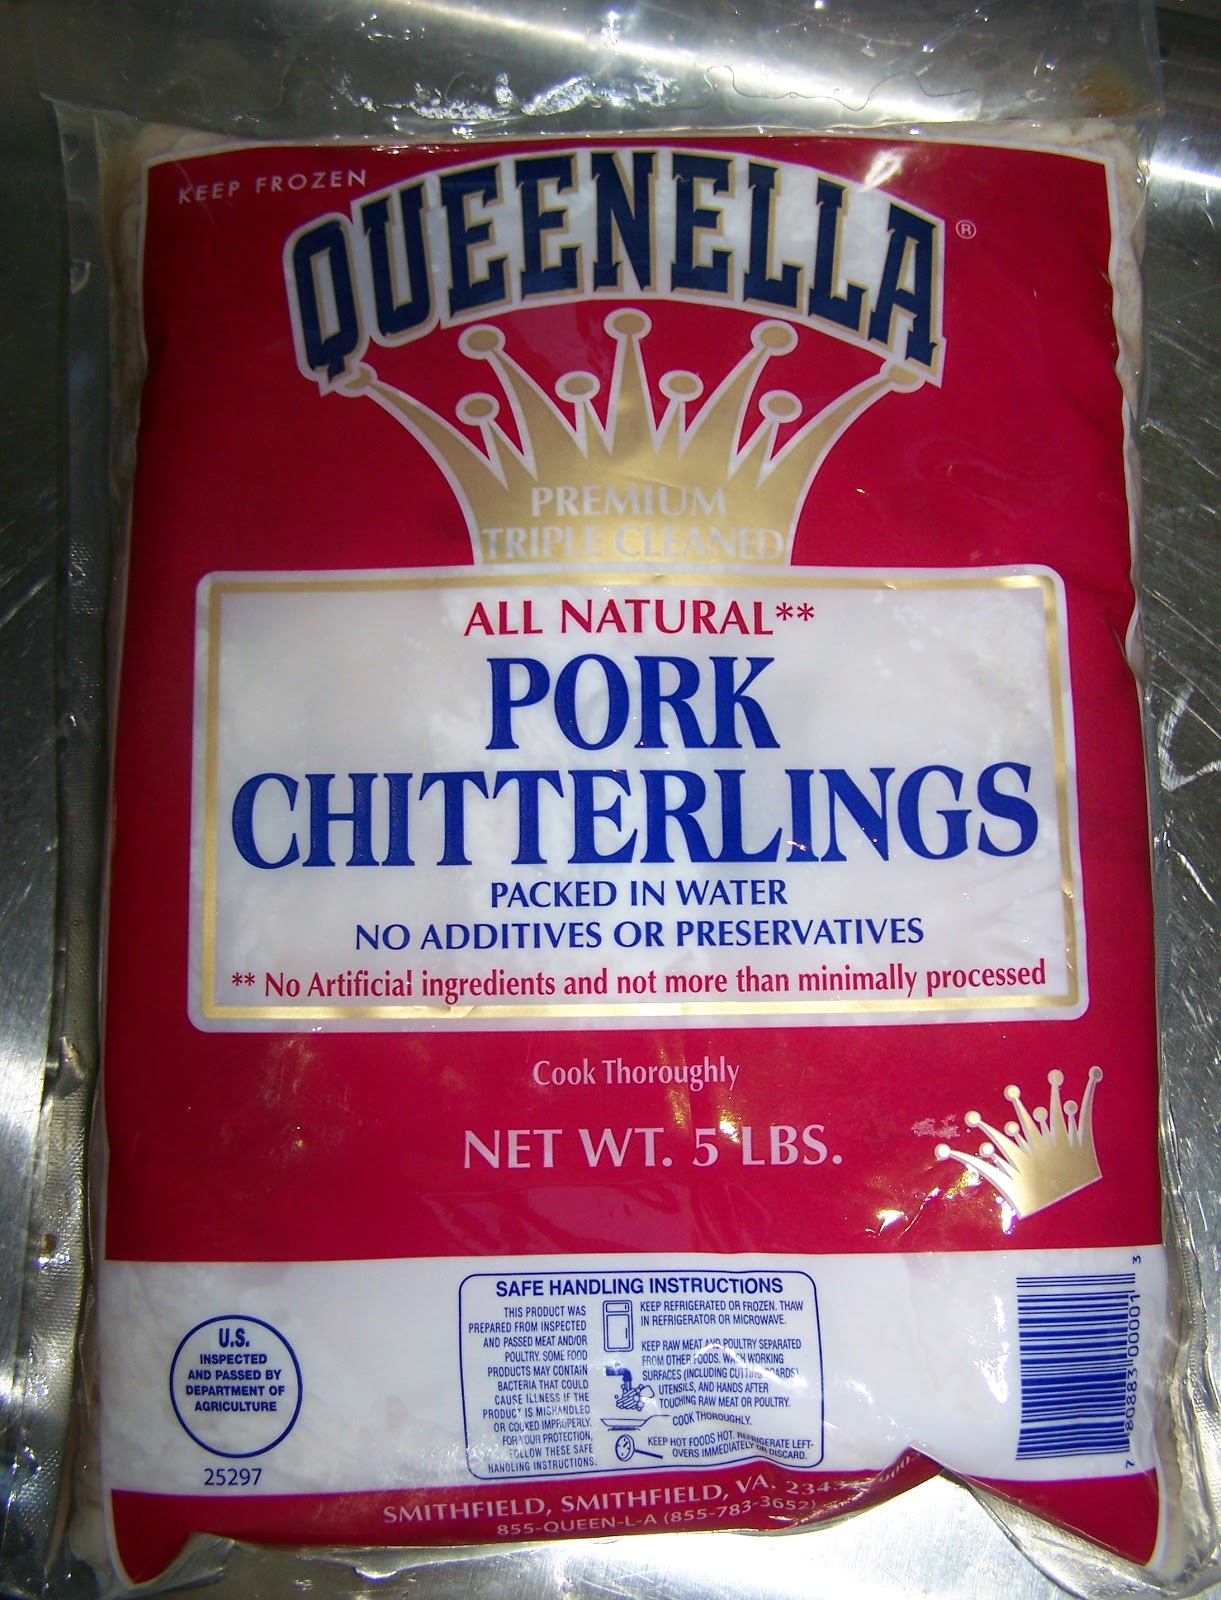 Smithfield Frozen Fresh Pork Chitterlings, 10 lb 